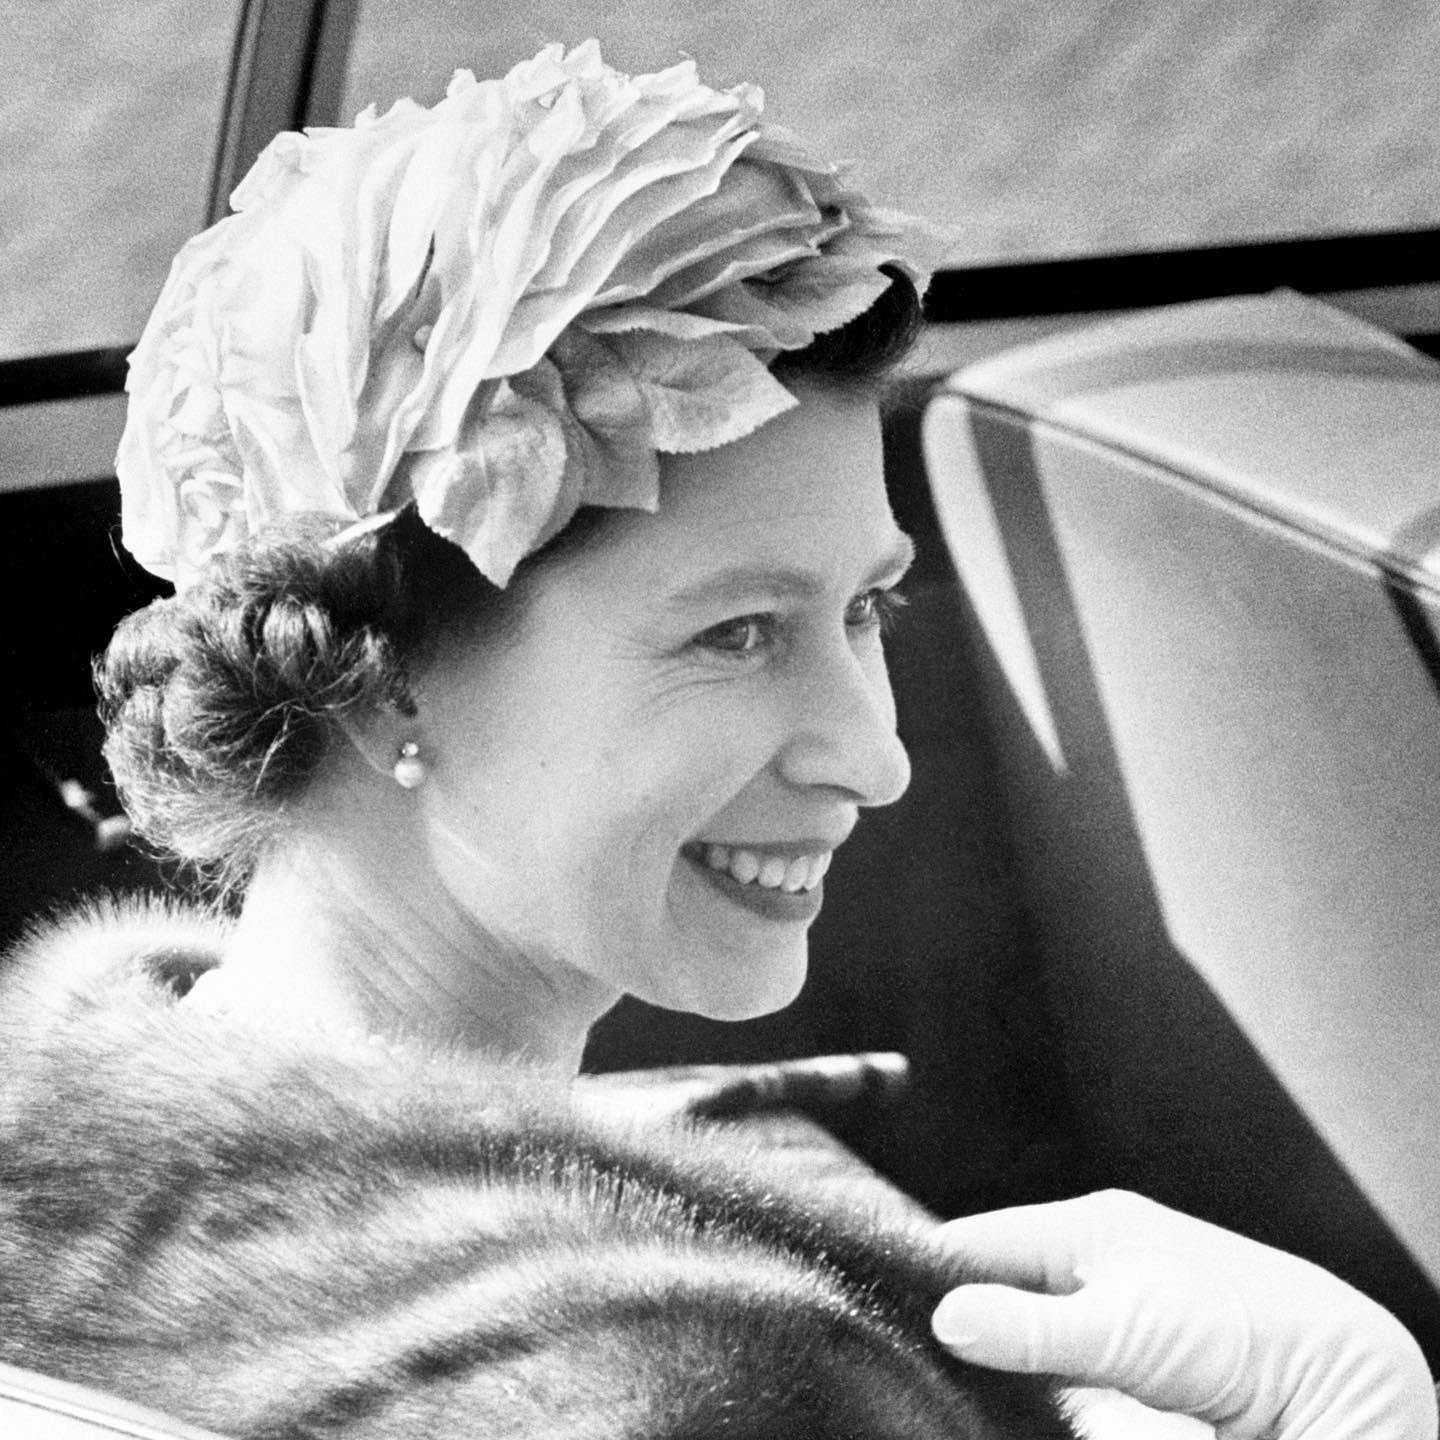 Rainha Elizabeth II (Foto: reprodução/instagram @dukeandduchessofcambridge)